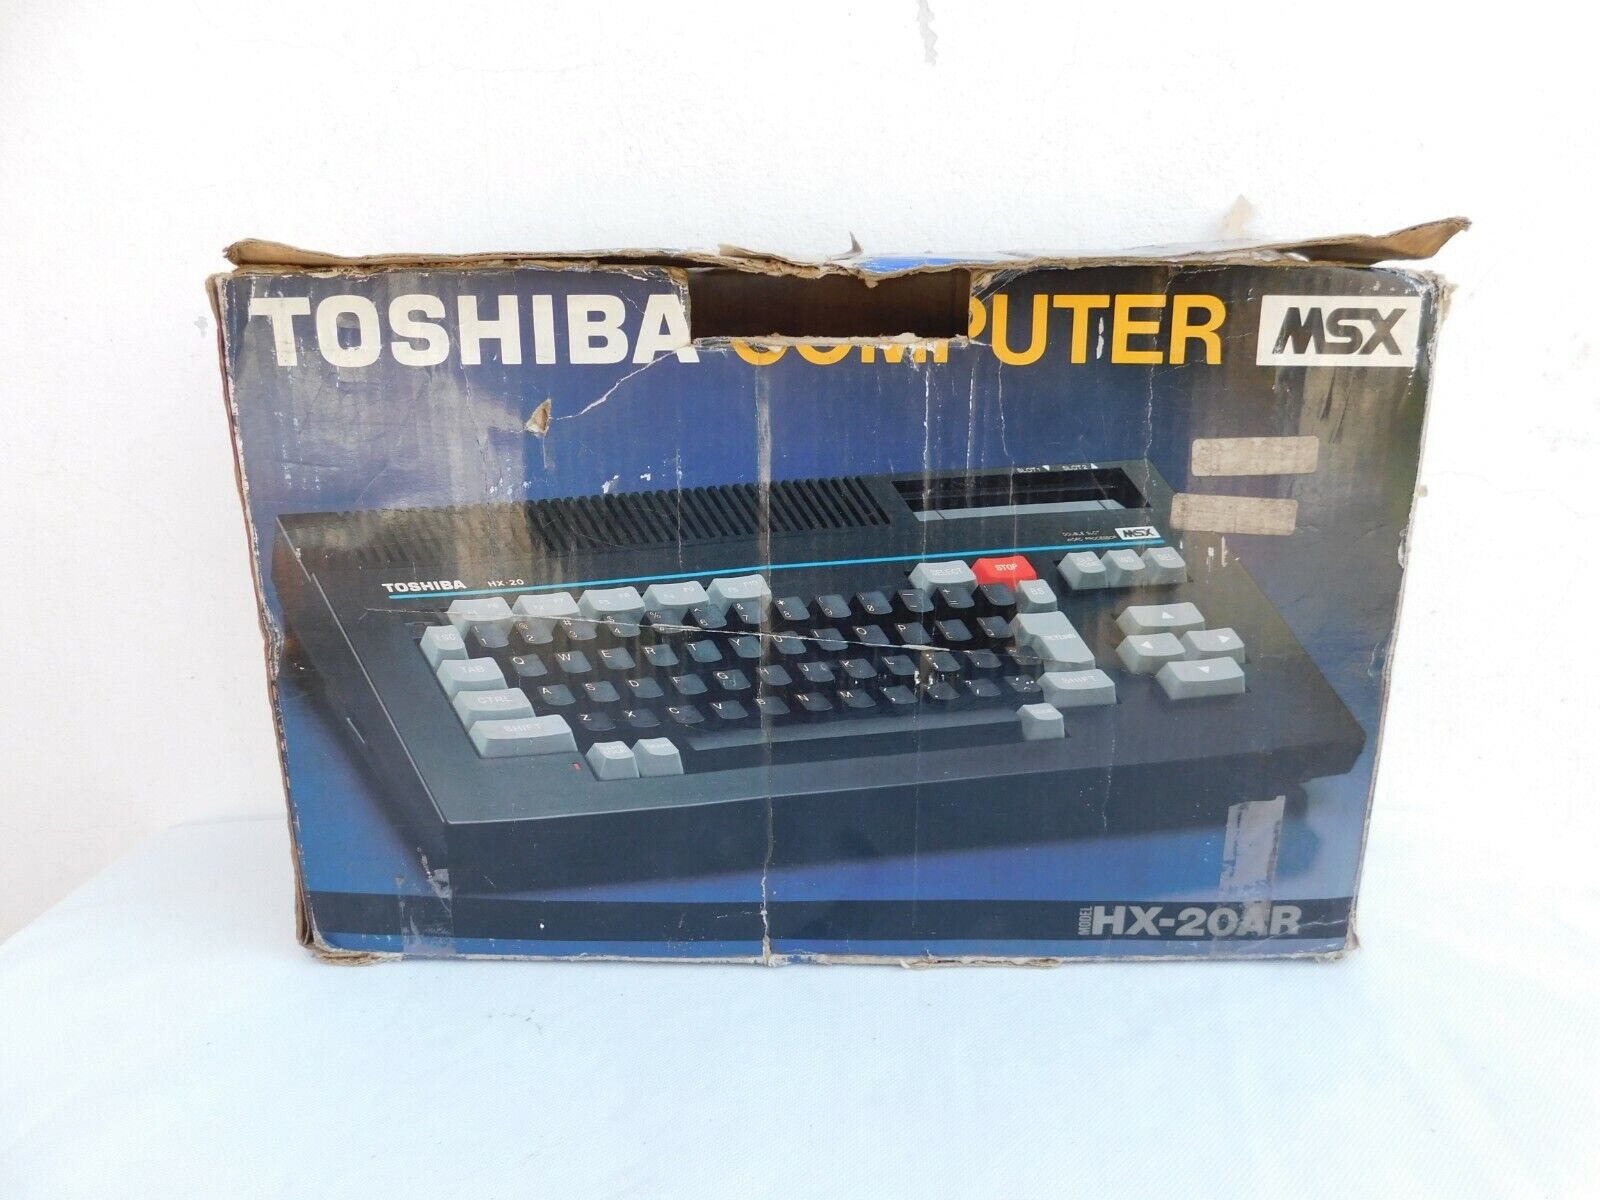 VINTAGE TOSHIBA HOME COMPUTER MSX HX-20AR RUNNING RETRO BOX, USER MANUAL, BASIC